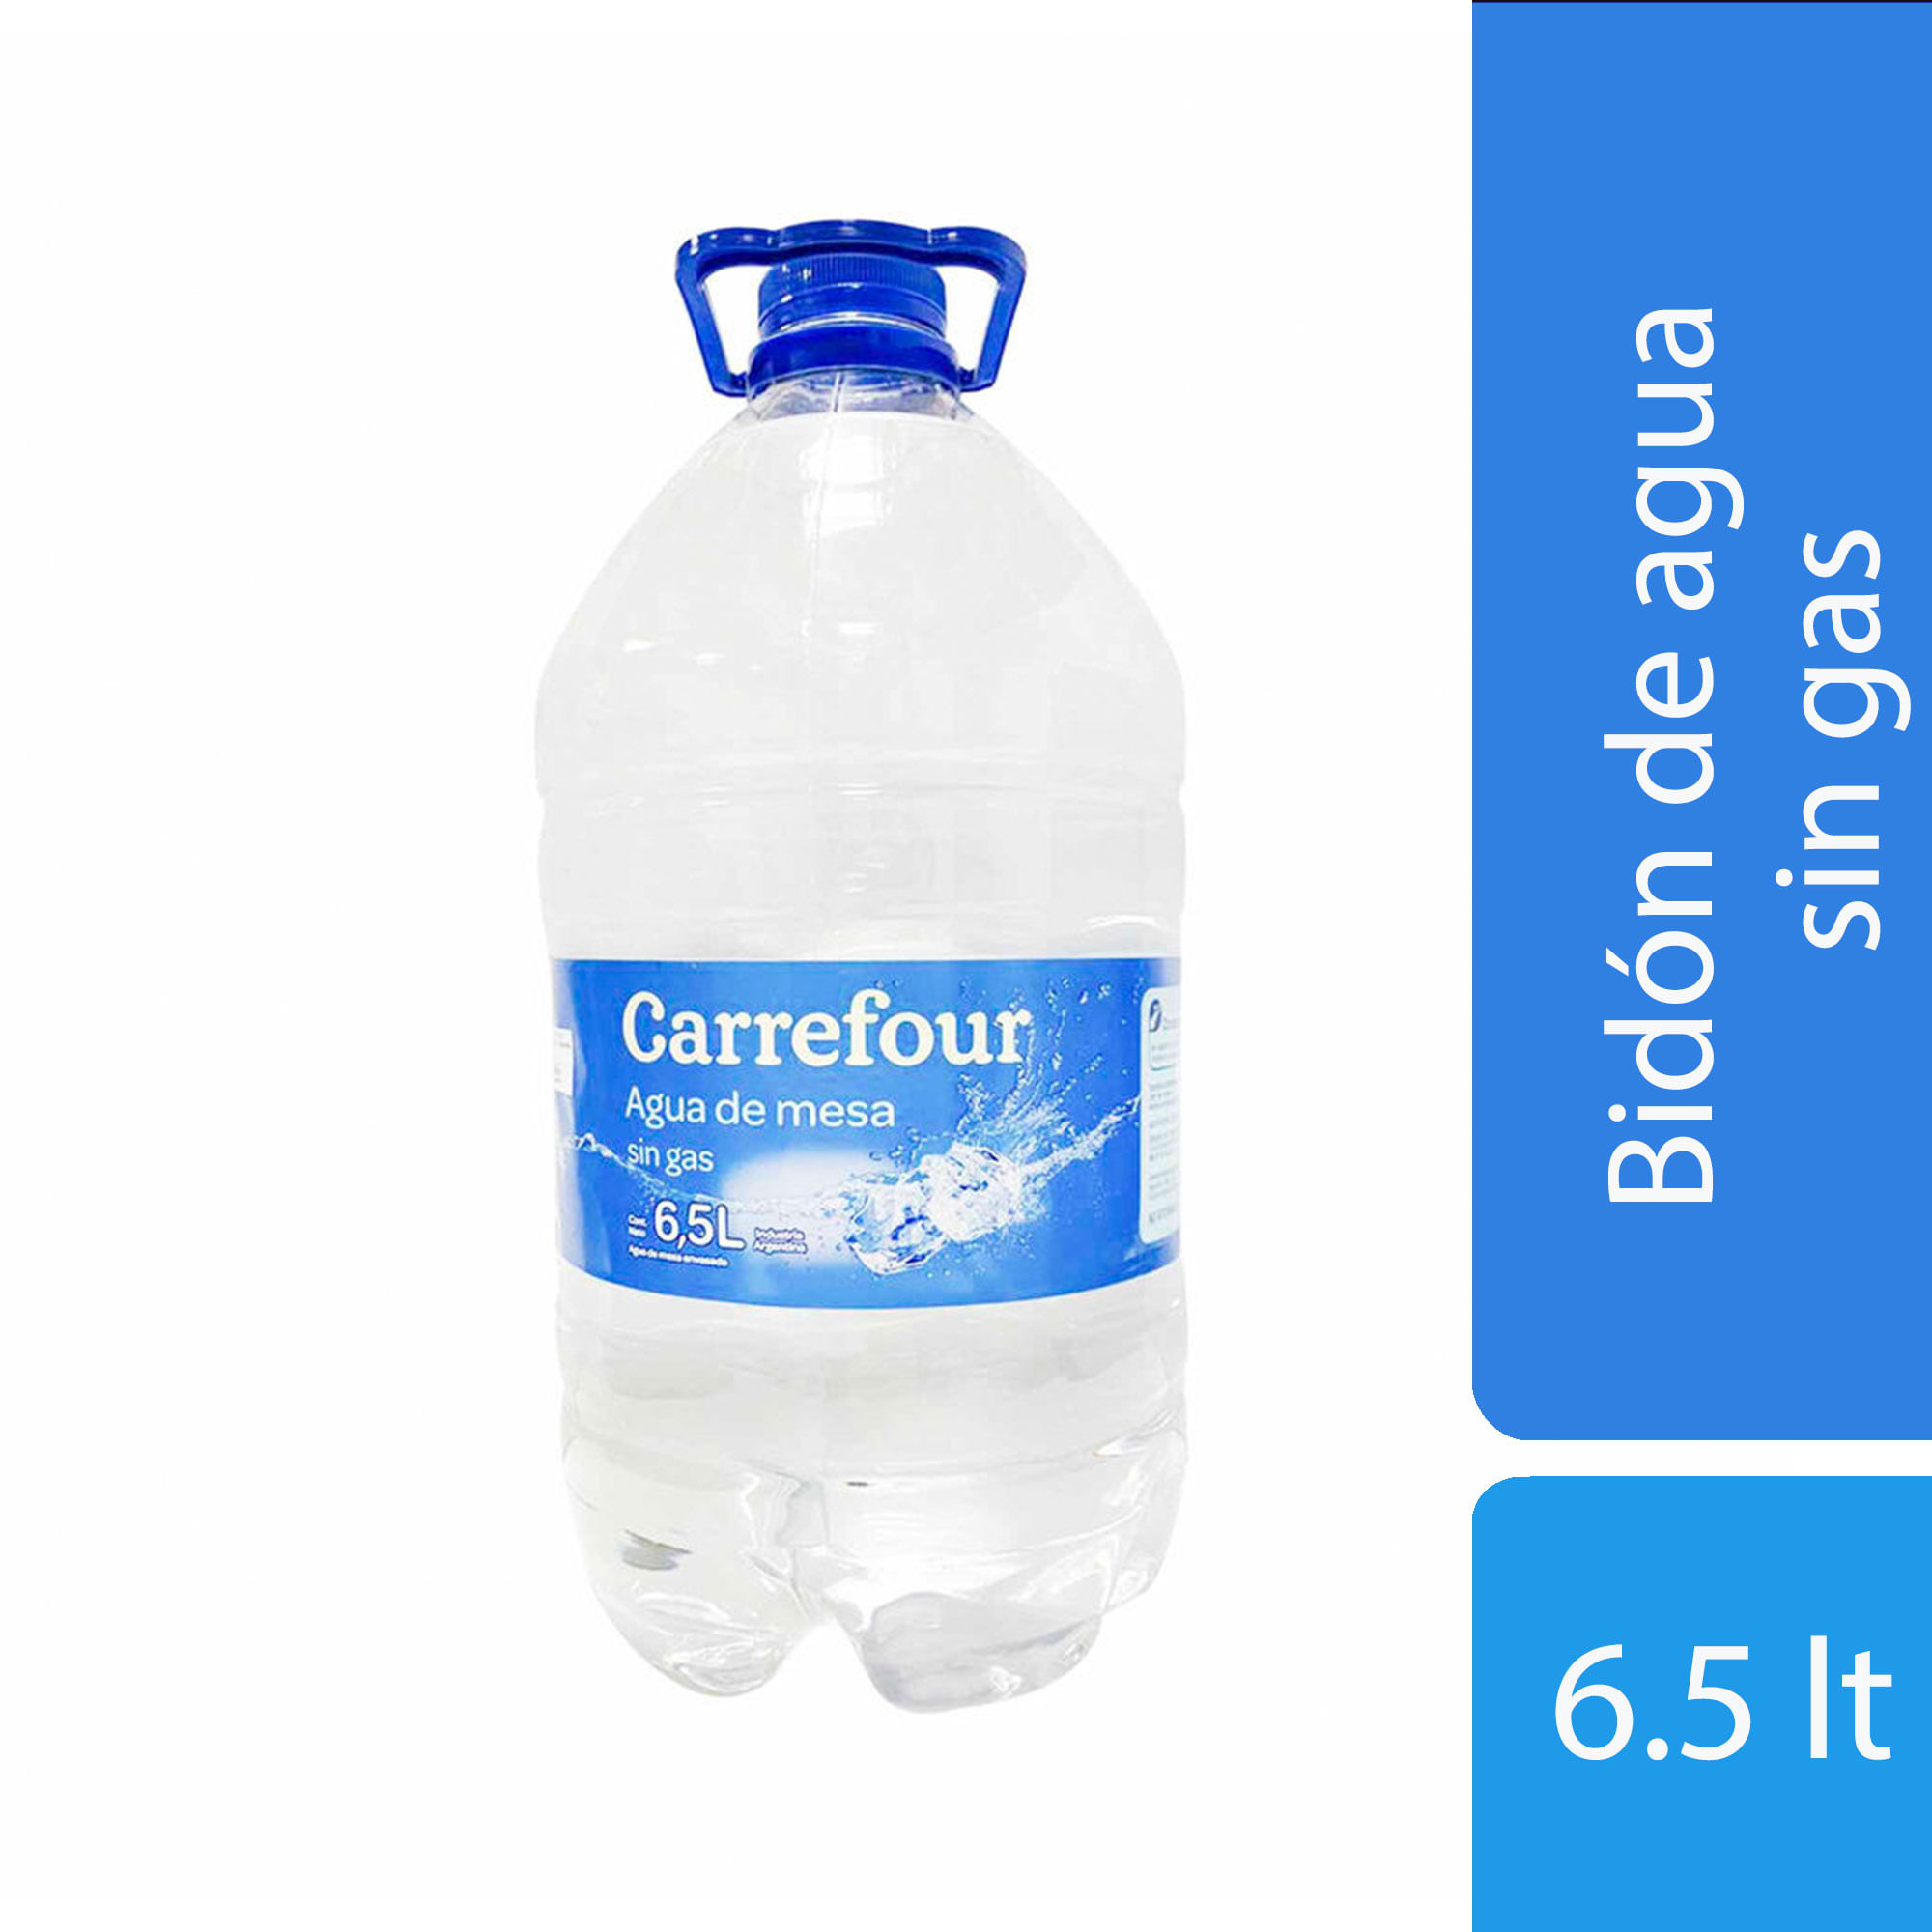 zorro Humo Ortografía Agua de mesa sin gas Carrefour bidón 6.5 l. - Carrefour